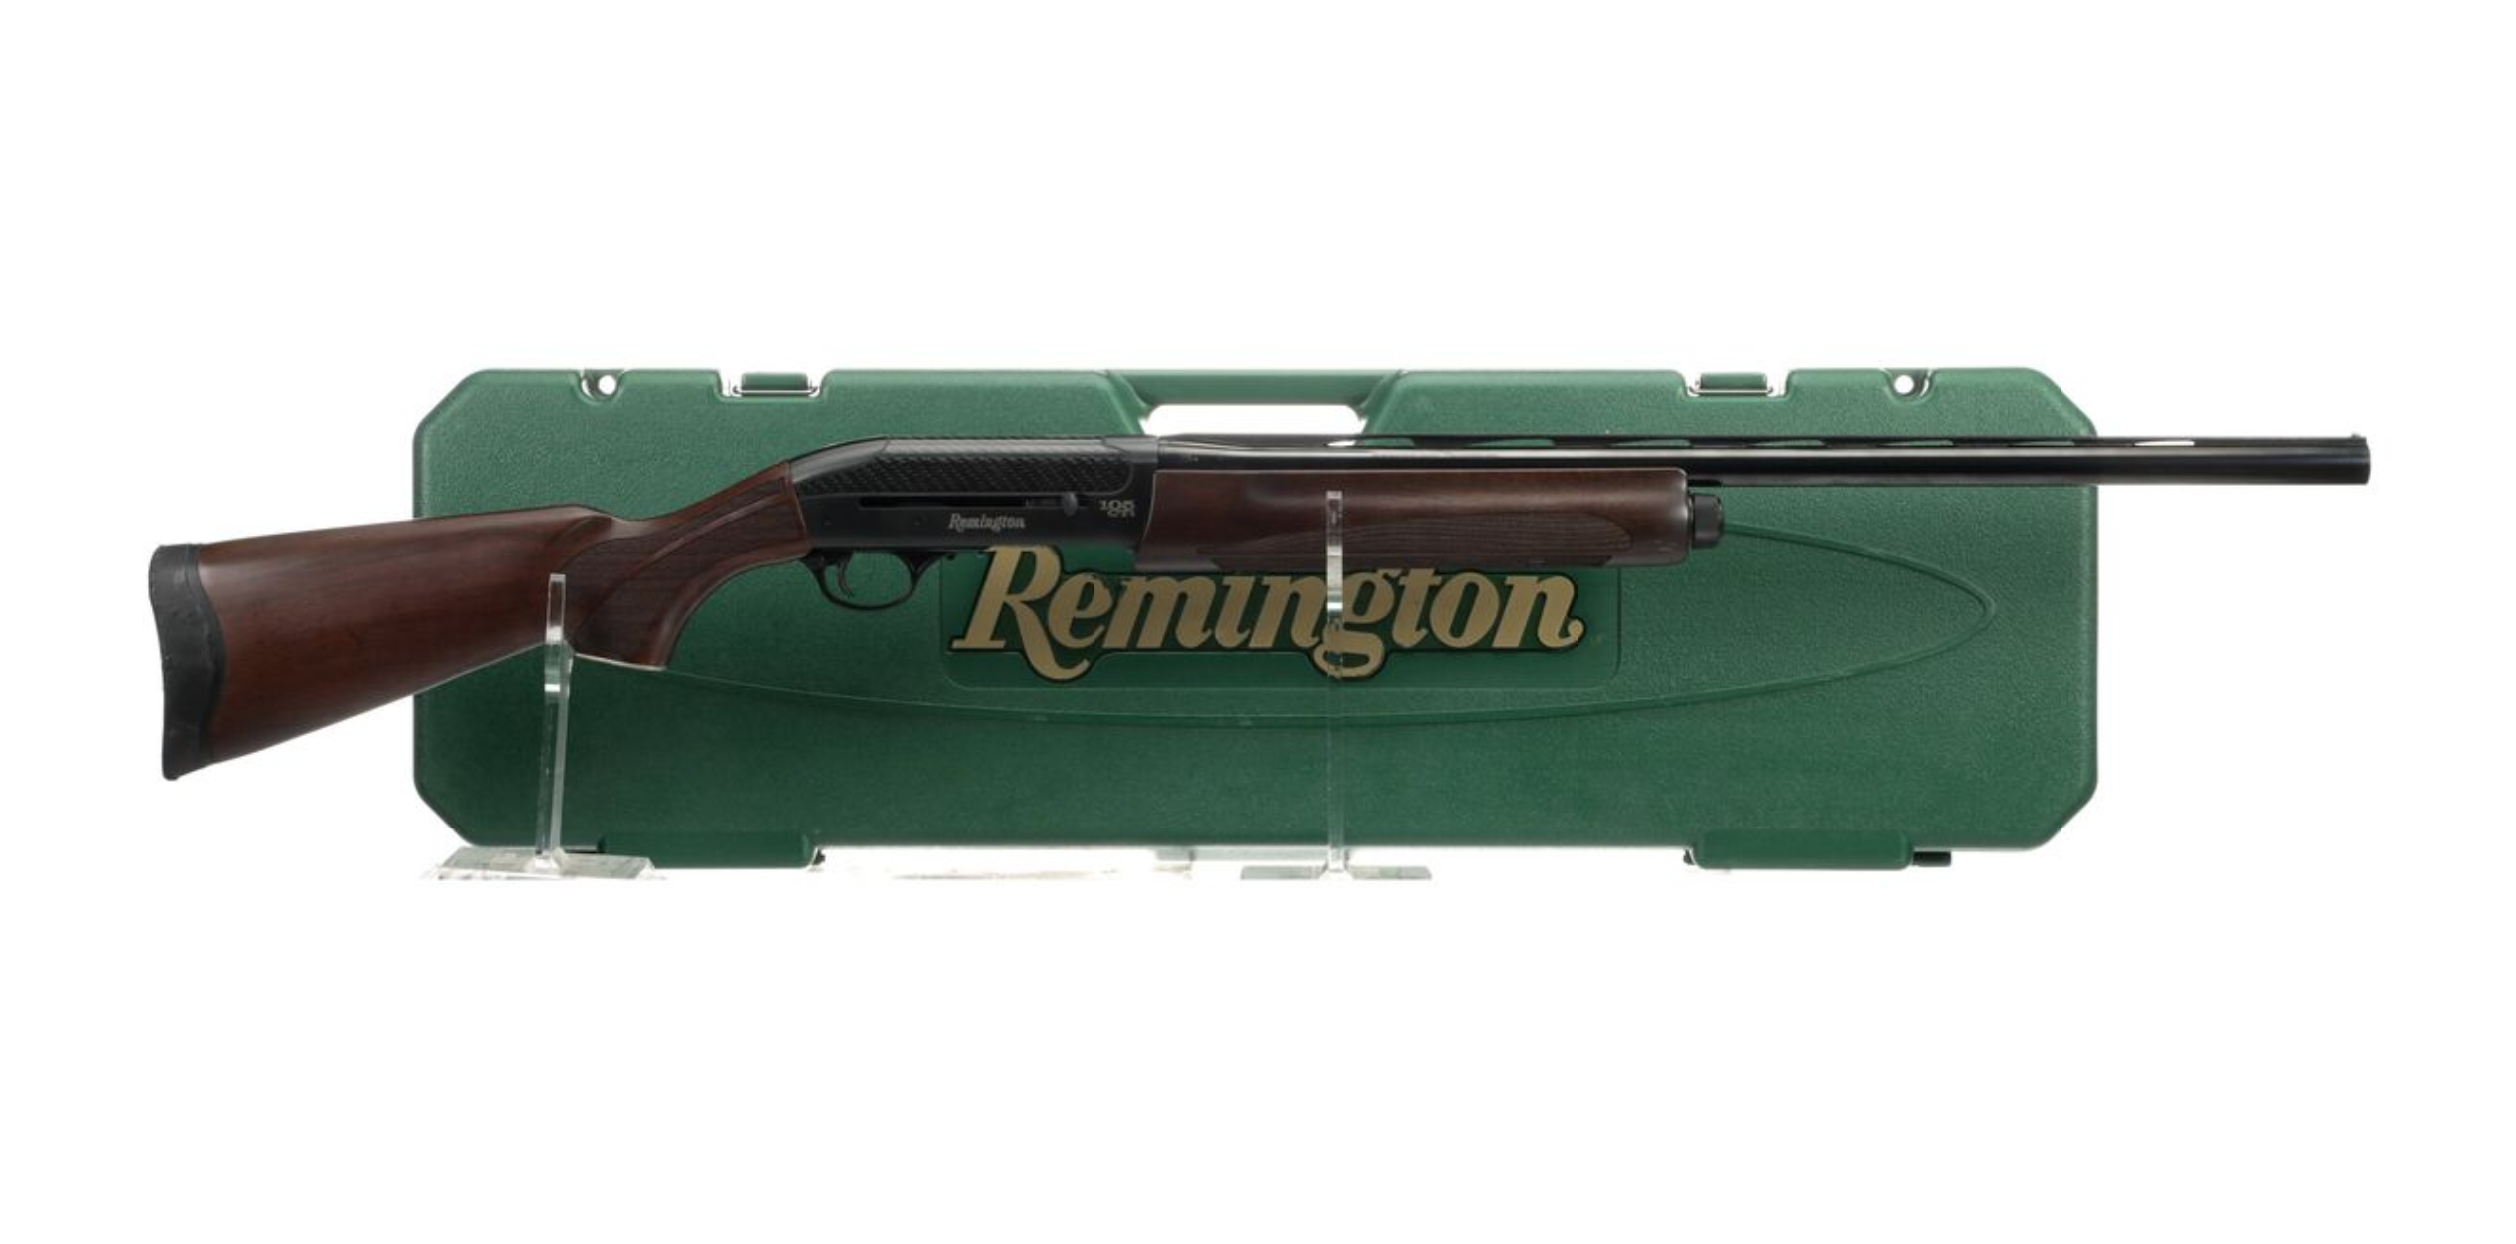 The Centenial Edition Remington CTi shotgun.